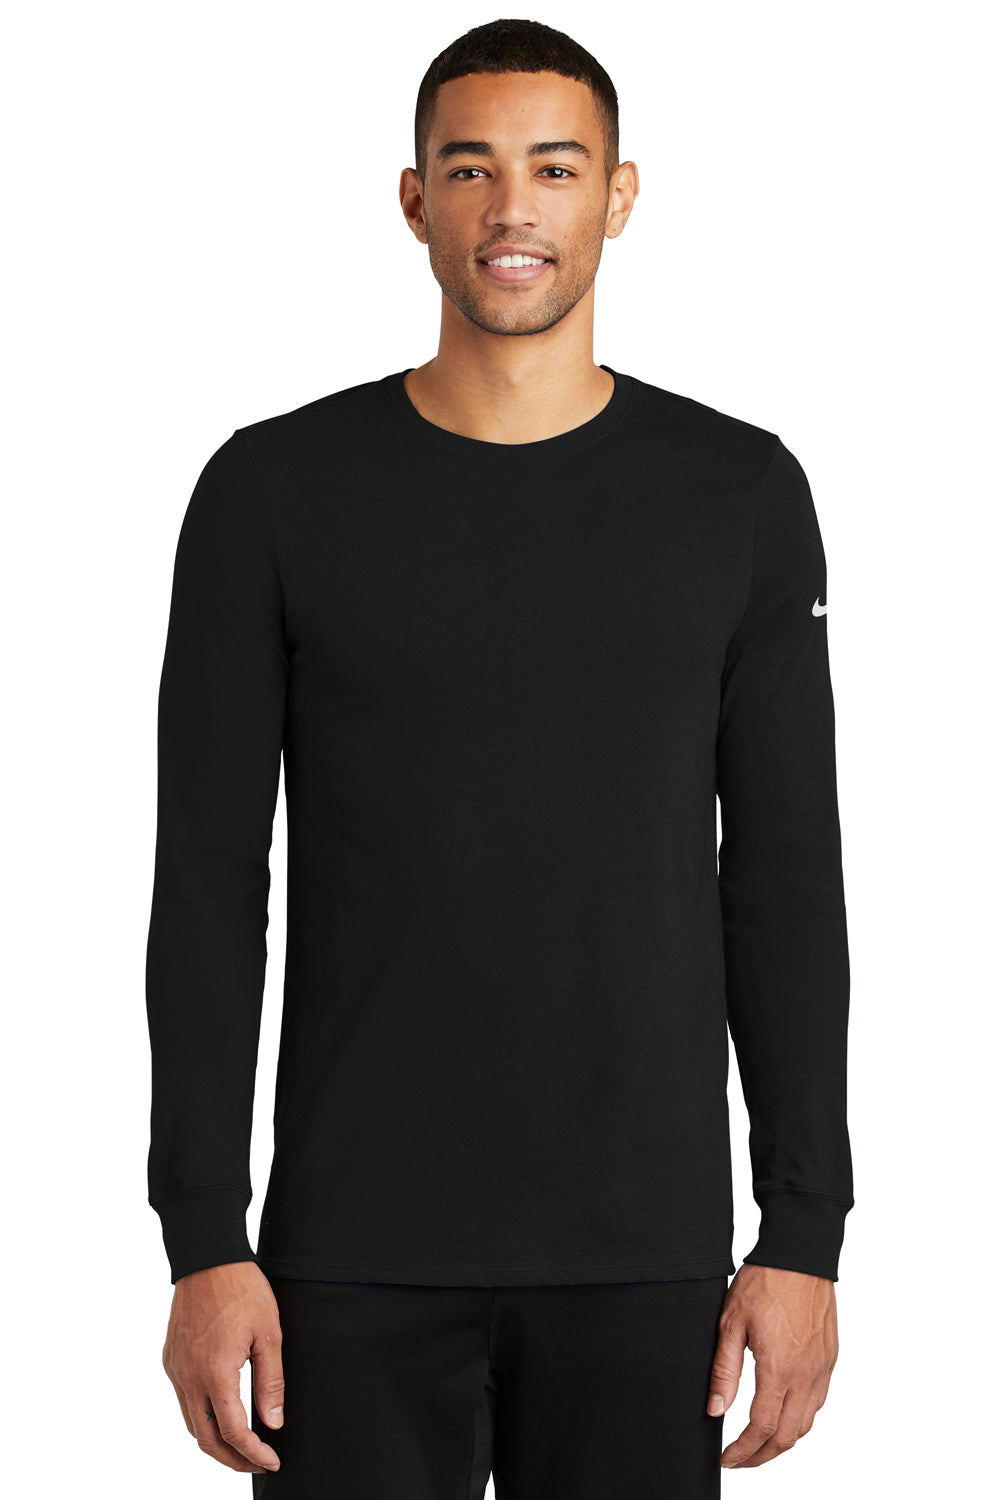 Nike NKBQ5230 Mens Dri-Fit Moisture Wicking Long Sleeve Crewneck T-Shirt Black Model Front